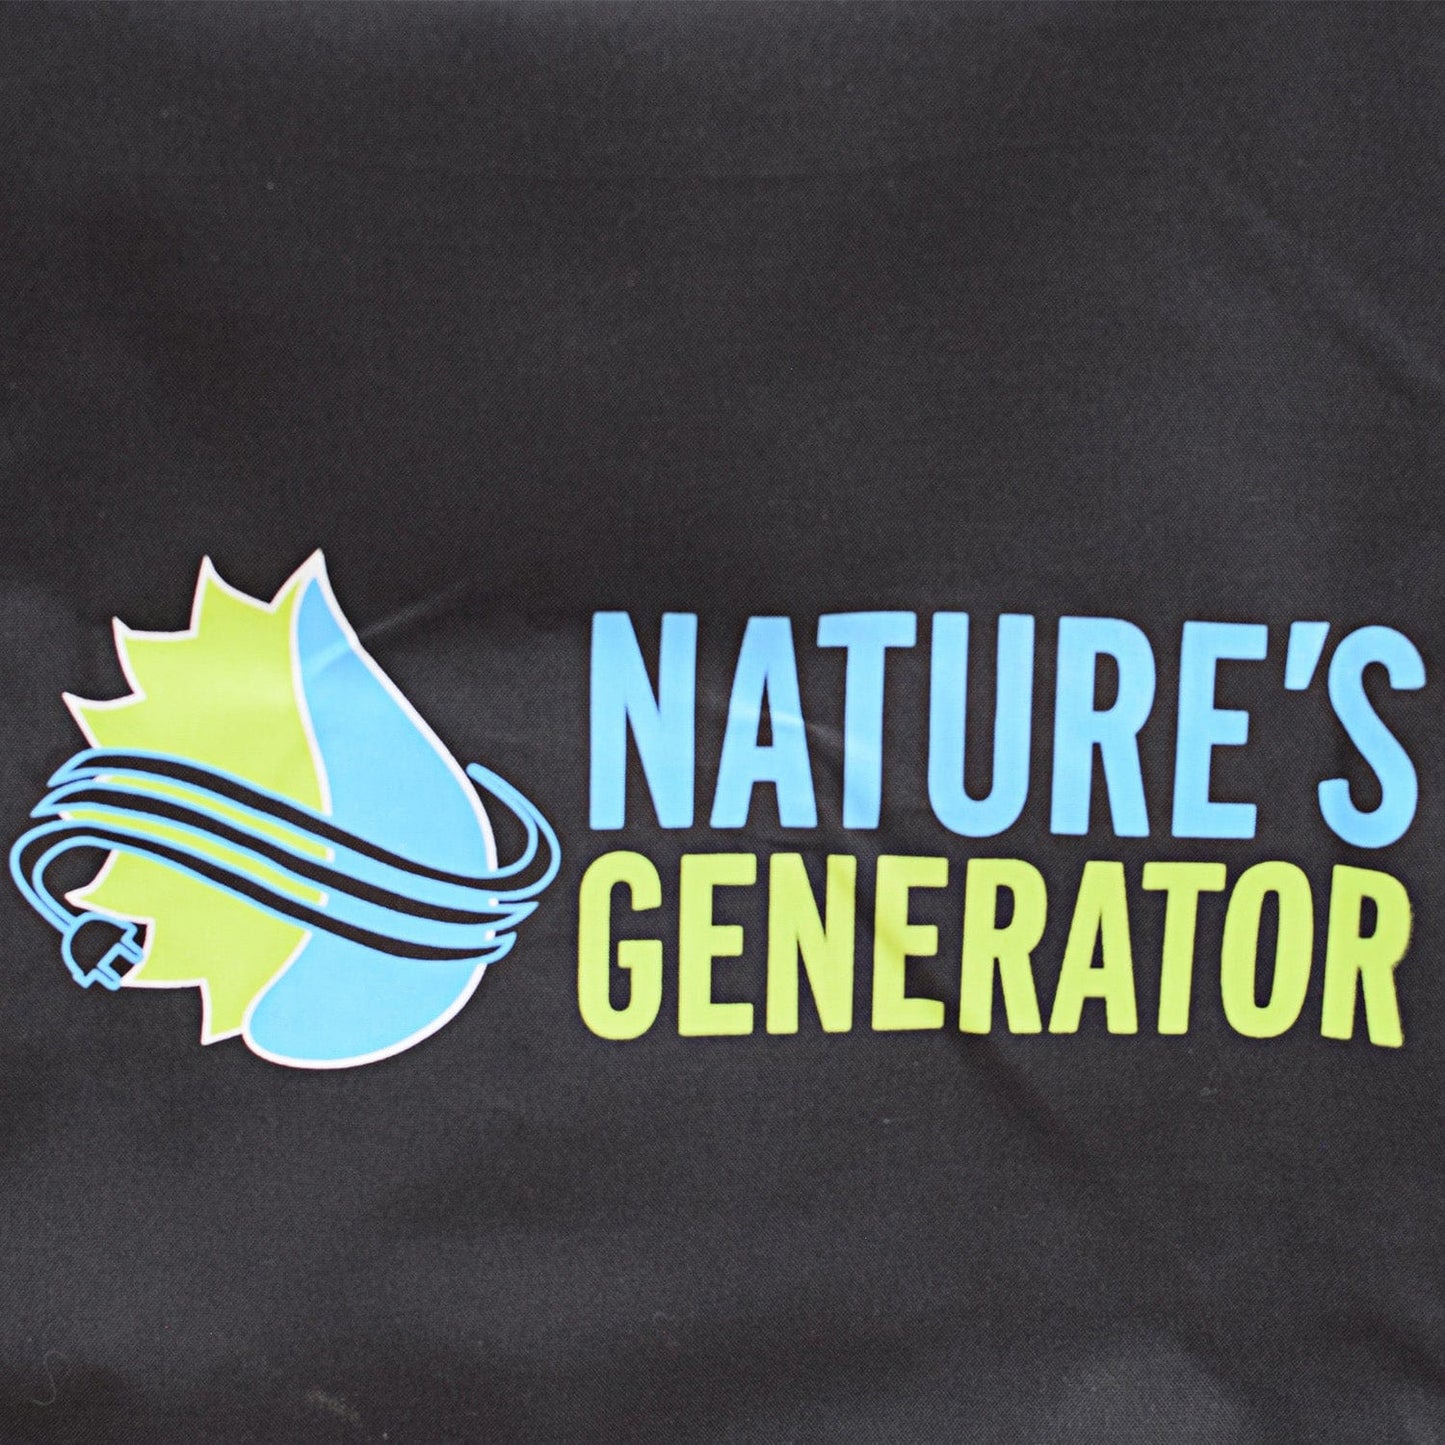 Nature's Generator Cover